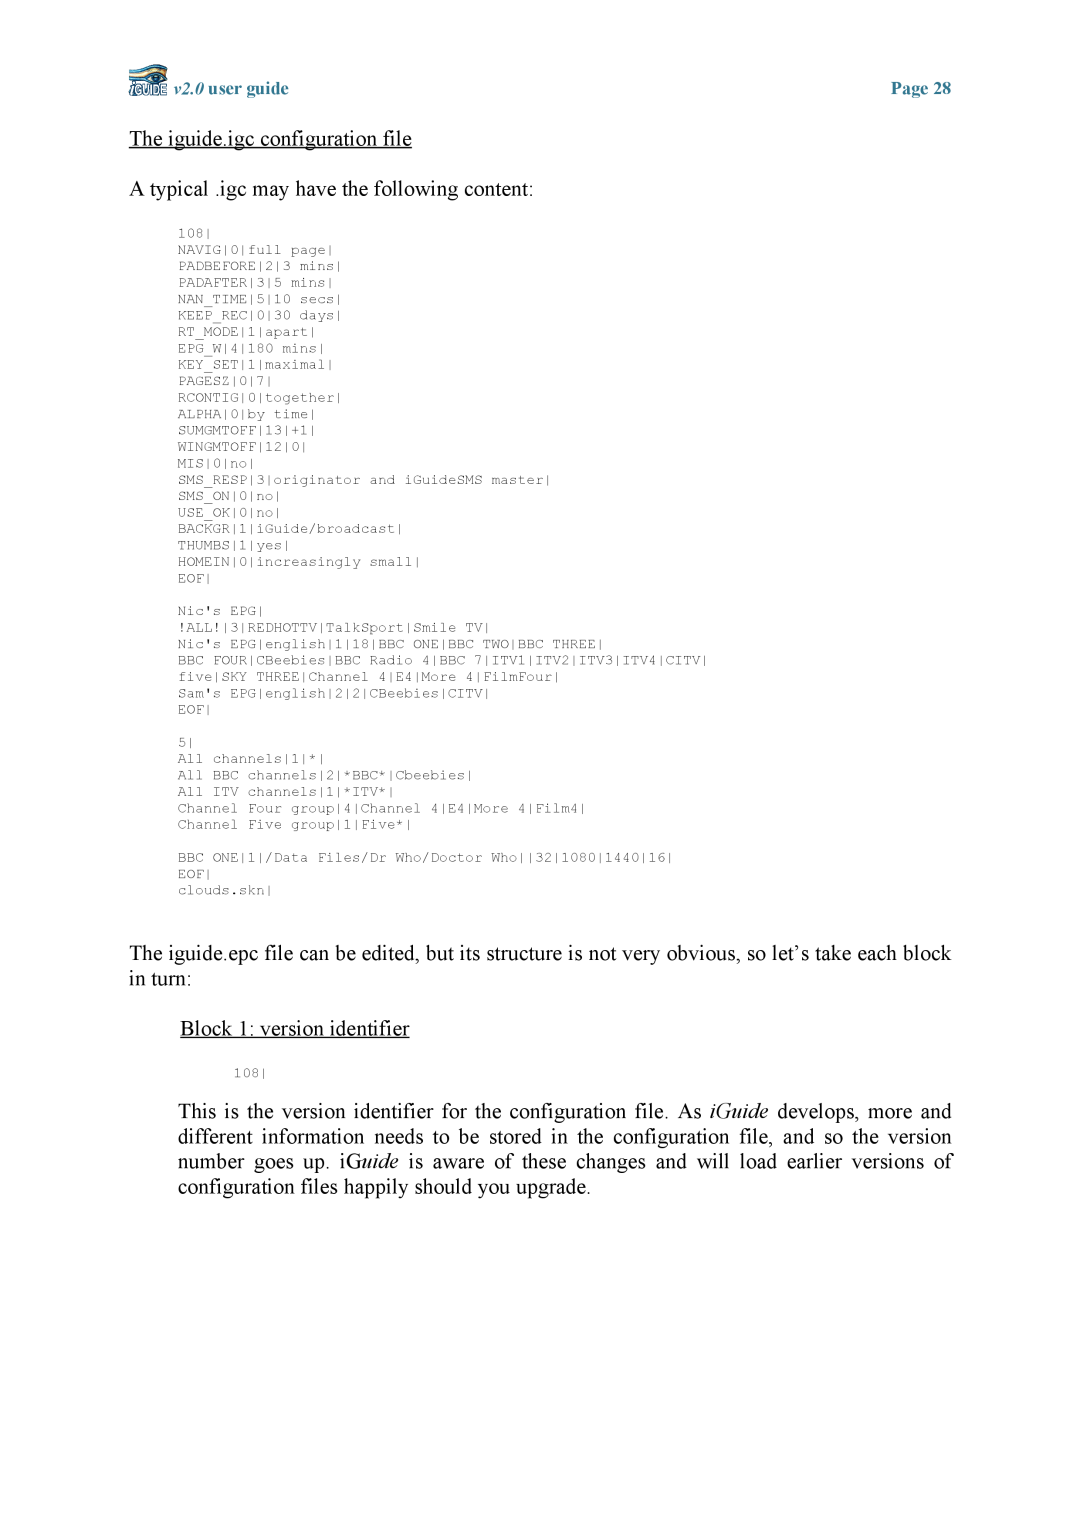 Topfield v2.0 manual The iguide.igc configuration file 